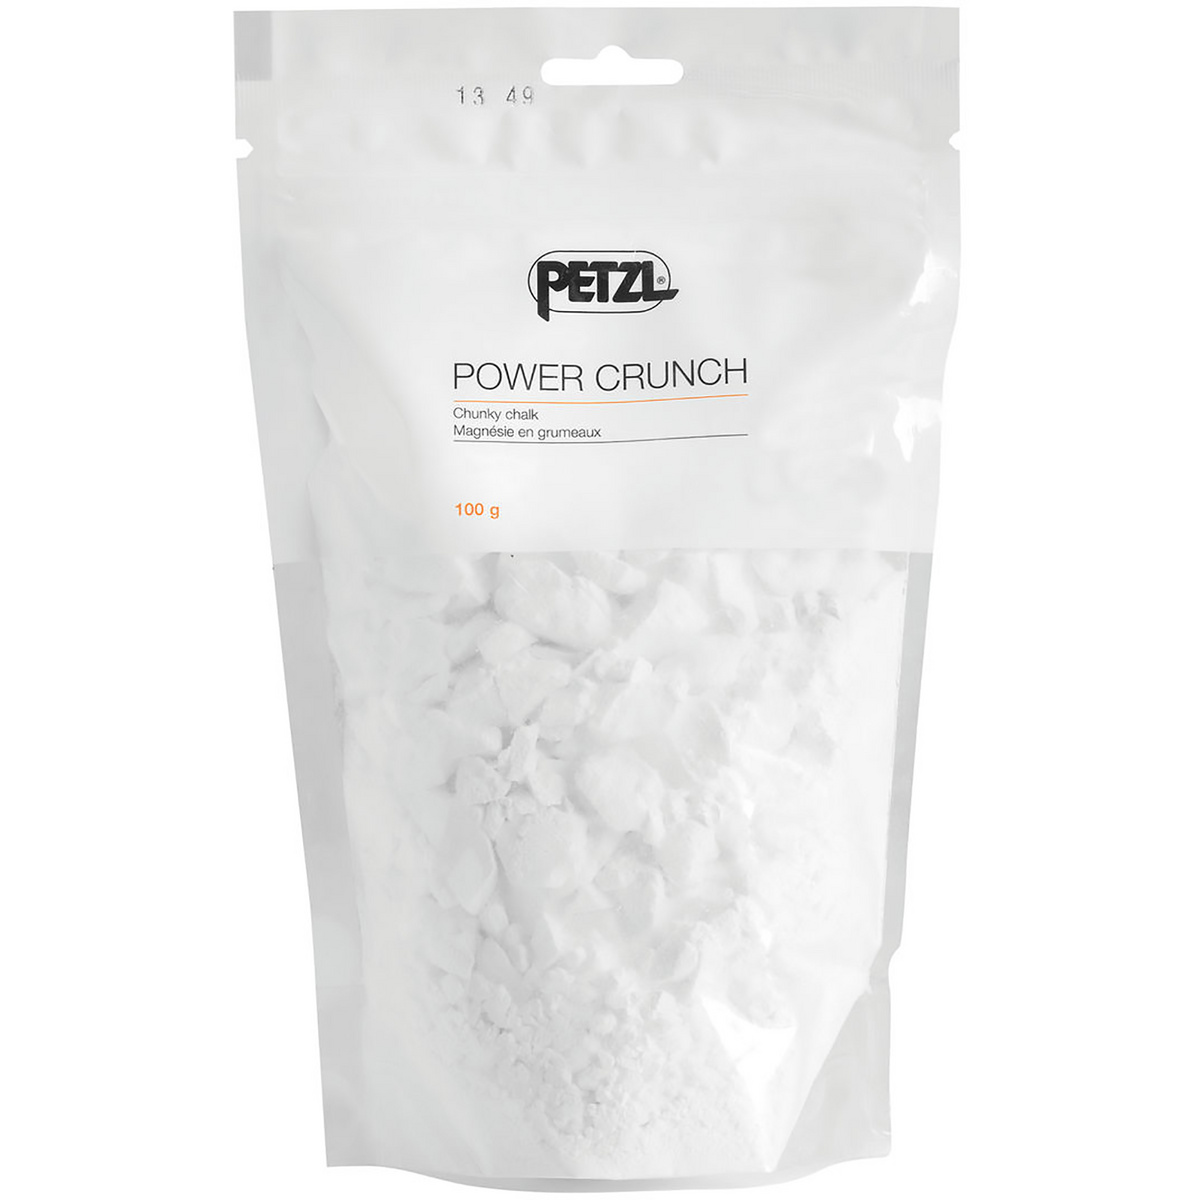 Image of Petzl Magnesite Power Crunch